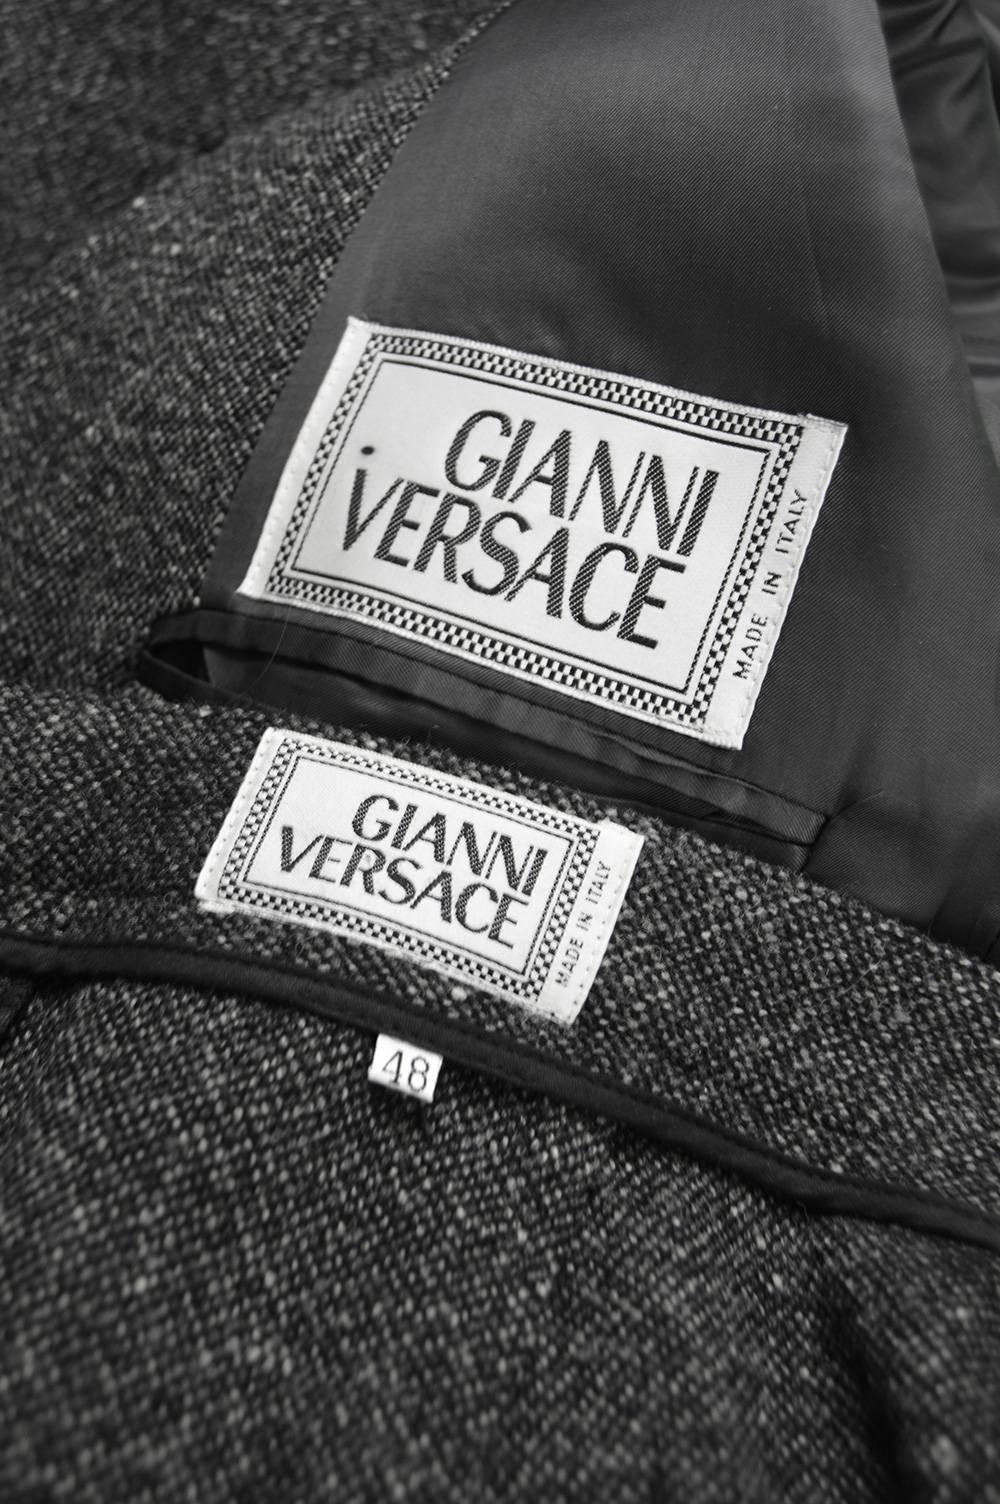 Gianni Versace Men's Vintage Grey Tweed Suit with wool boucle collar, 1990s 5